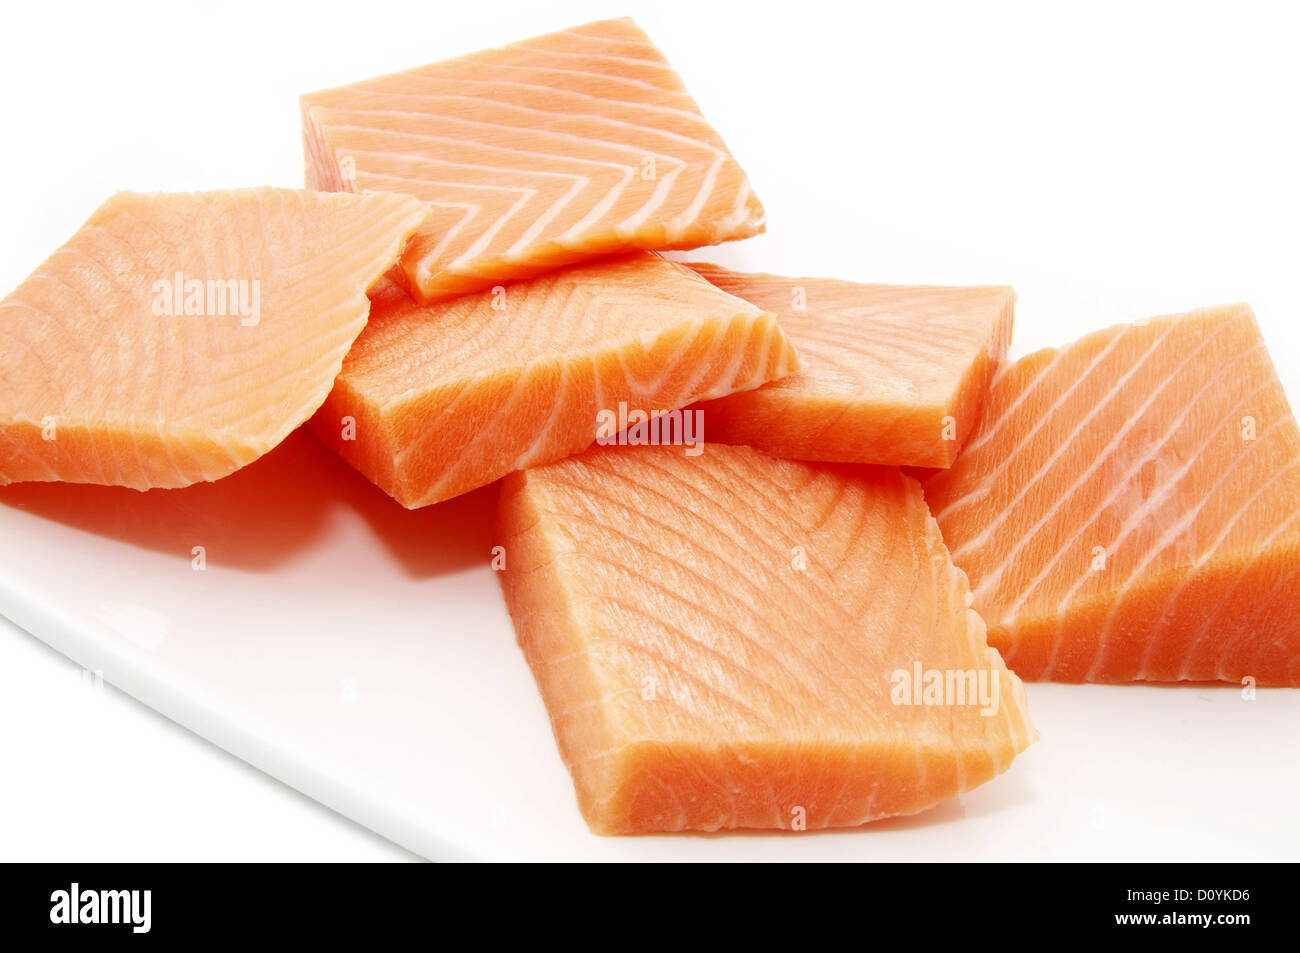 https://c8.alamy.com/comp/D0YKD6/a-plate-of-salmon-meat-D0YKD6.jpg